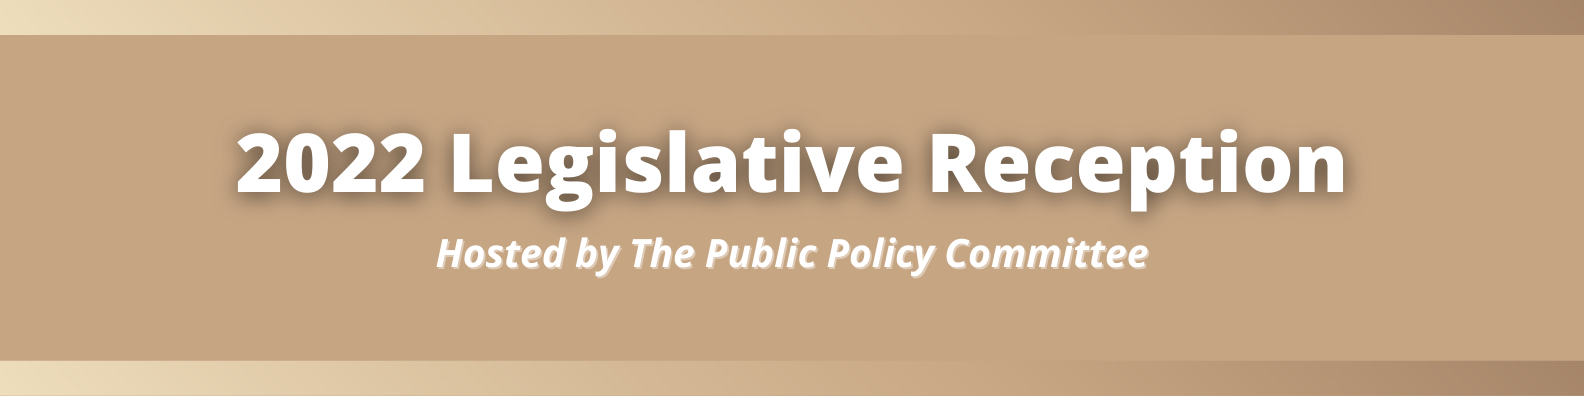 legislative reception banner